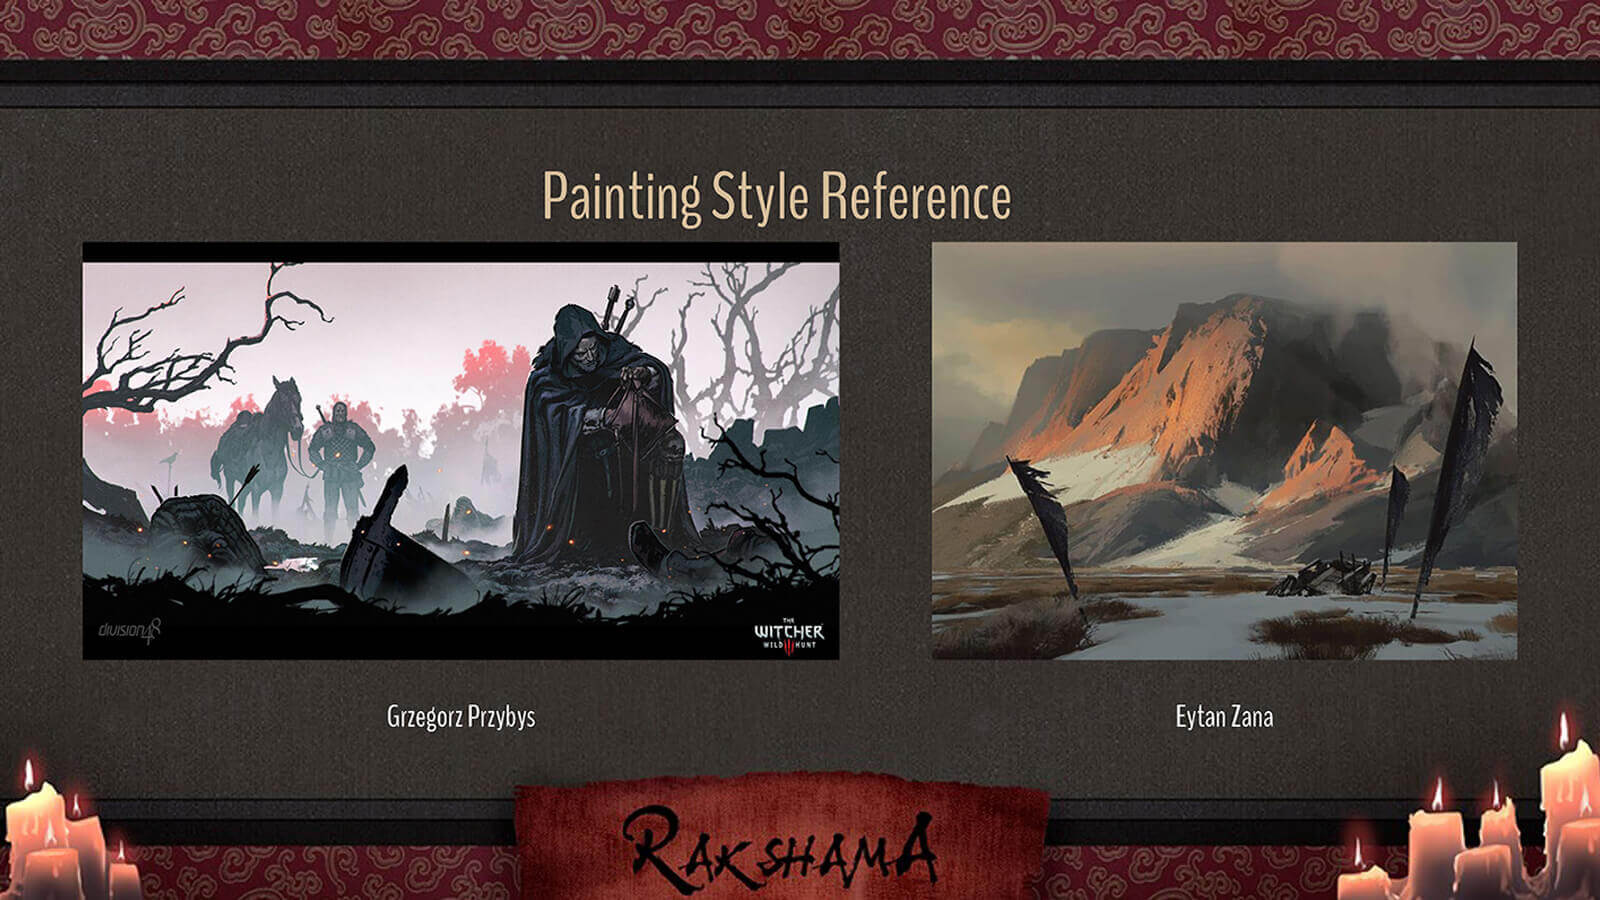 Painting Style Reference slide for the film Rakshama, including artwork by Grzegorz Przybys and Eytan Zana